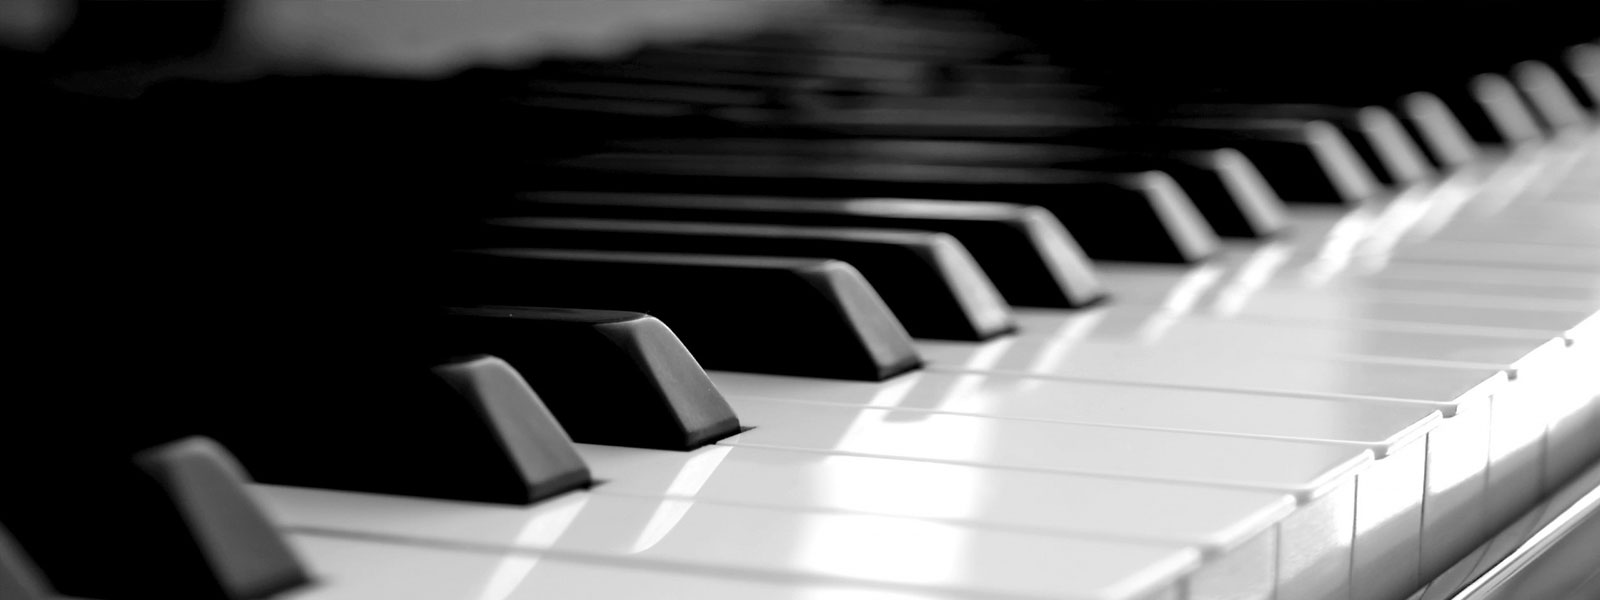 Piano Keyboard image